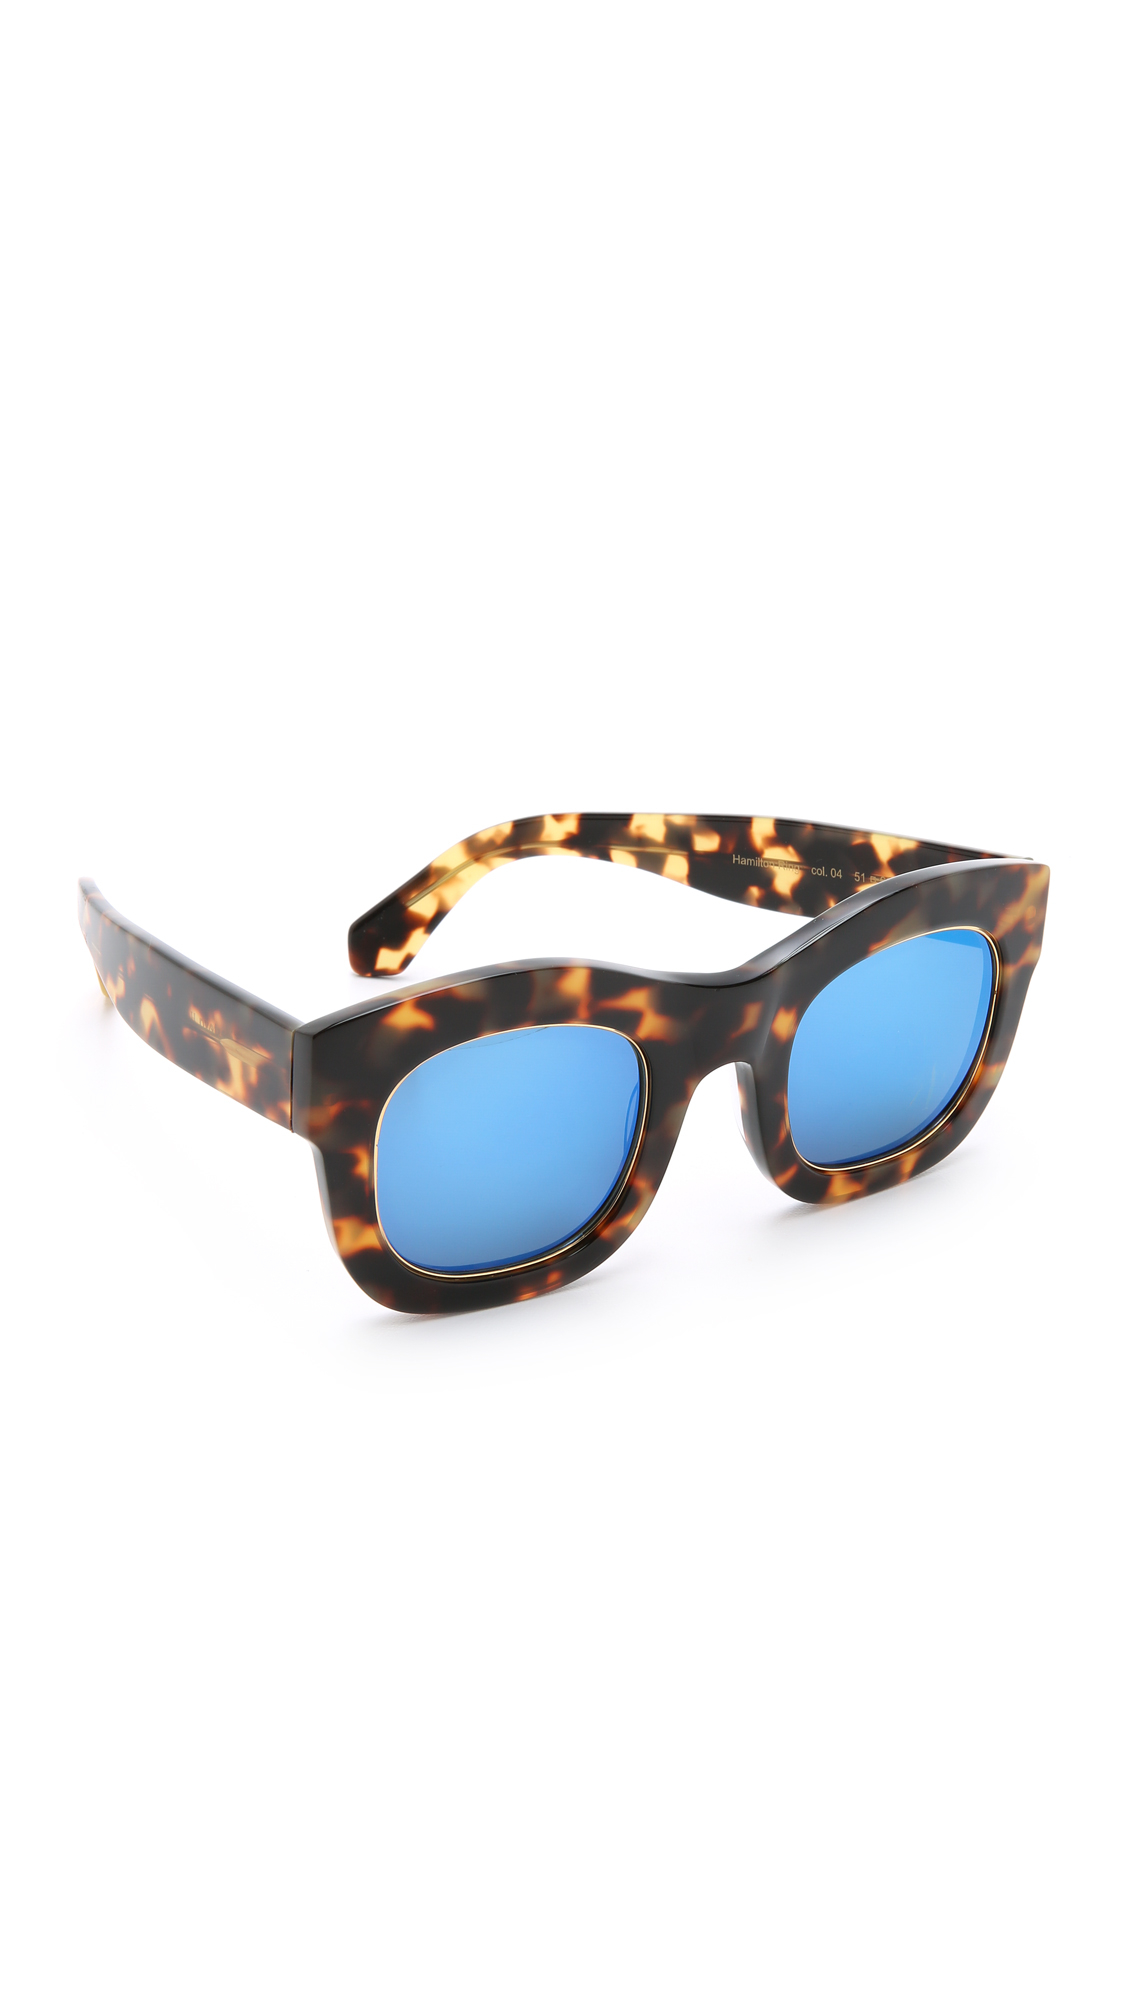 illesteva tortoiseblue hamilton ring mirrored sunglasses tortoiseblue blue product 3 575728498 normal